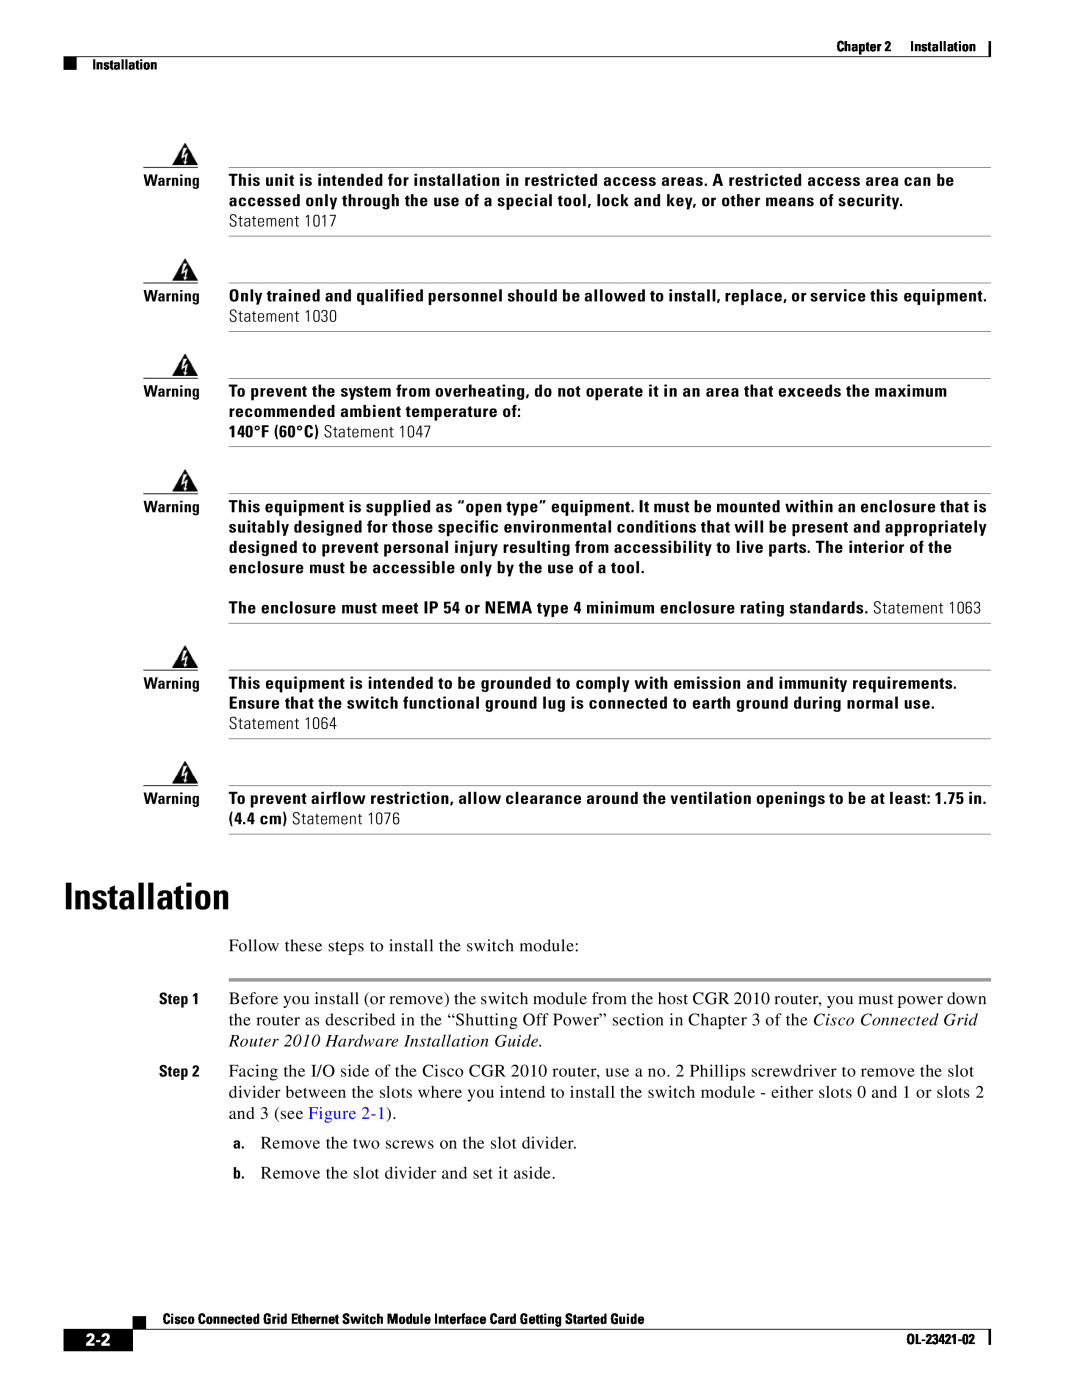 Cisco Systems OL-23421-02 manual Installation 